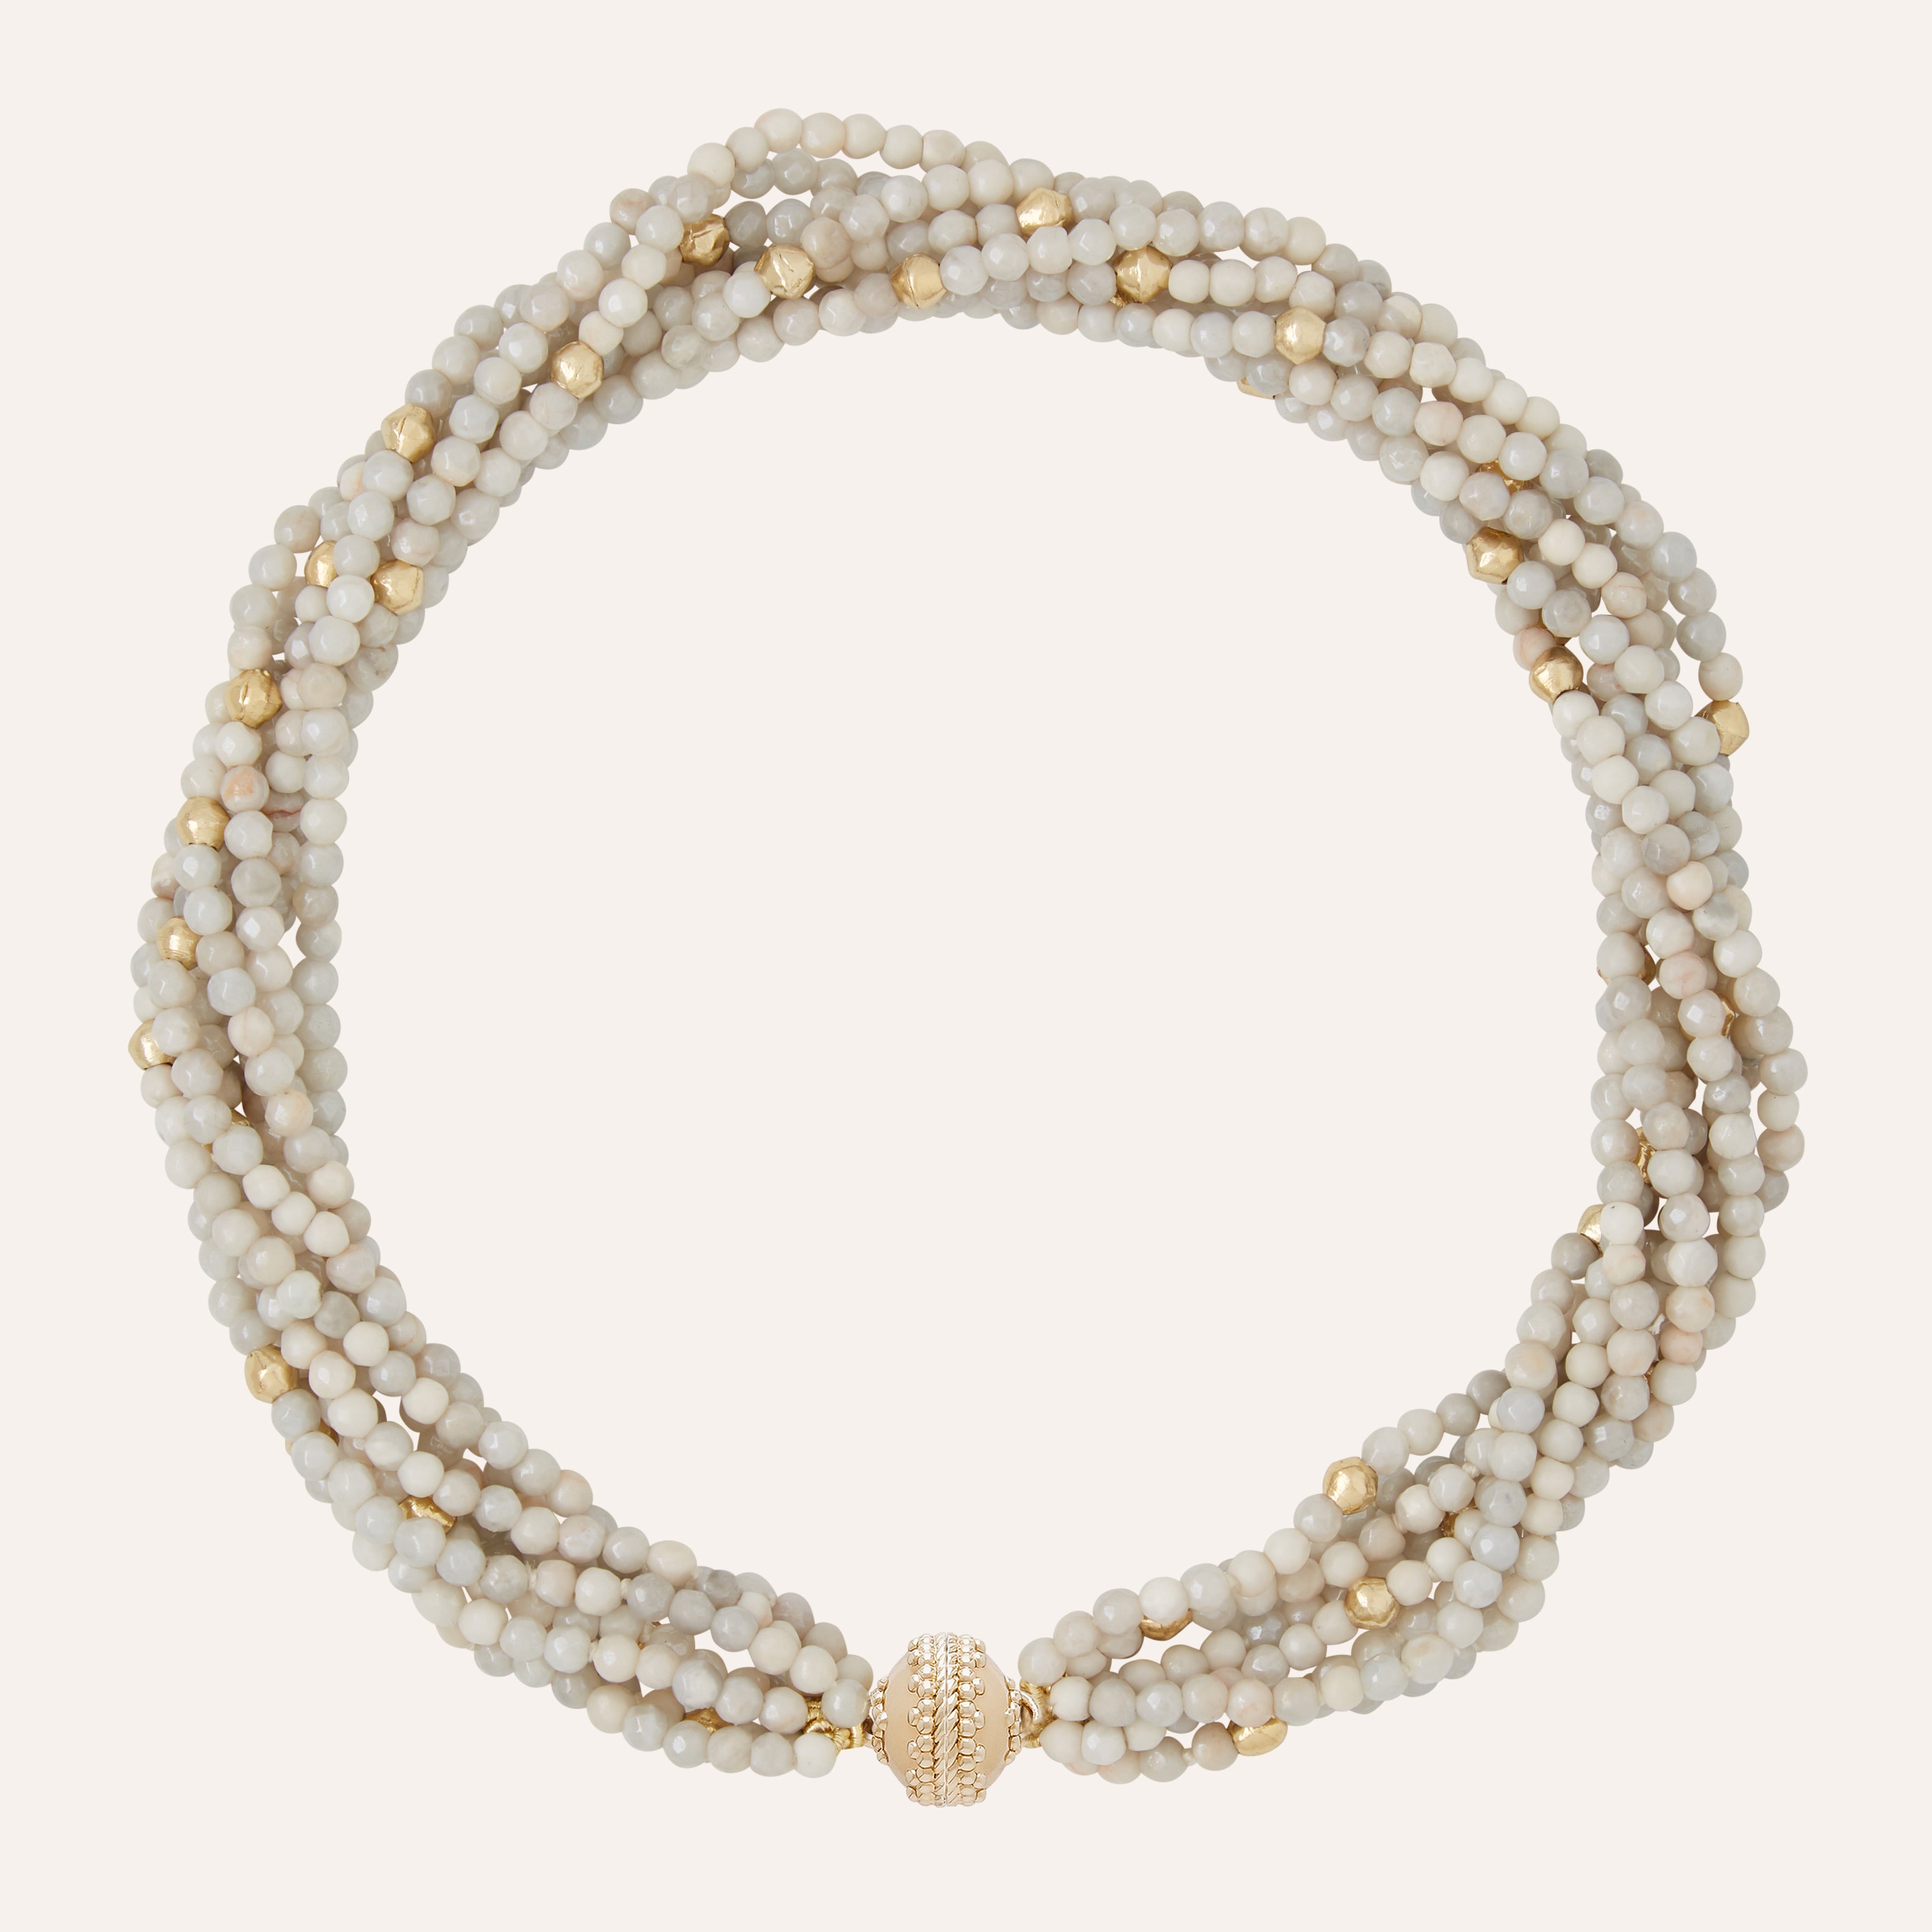 Peppercorn Victoire Gray Agate 4mm Multi-Strand Necklace